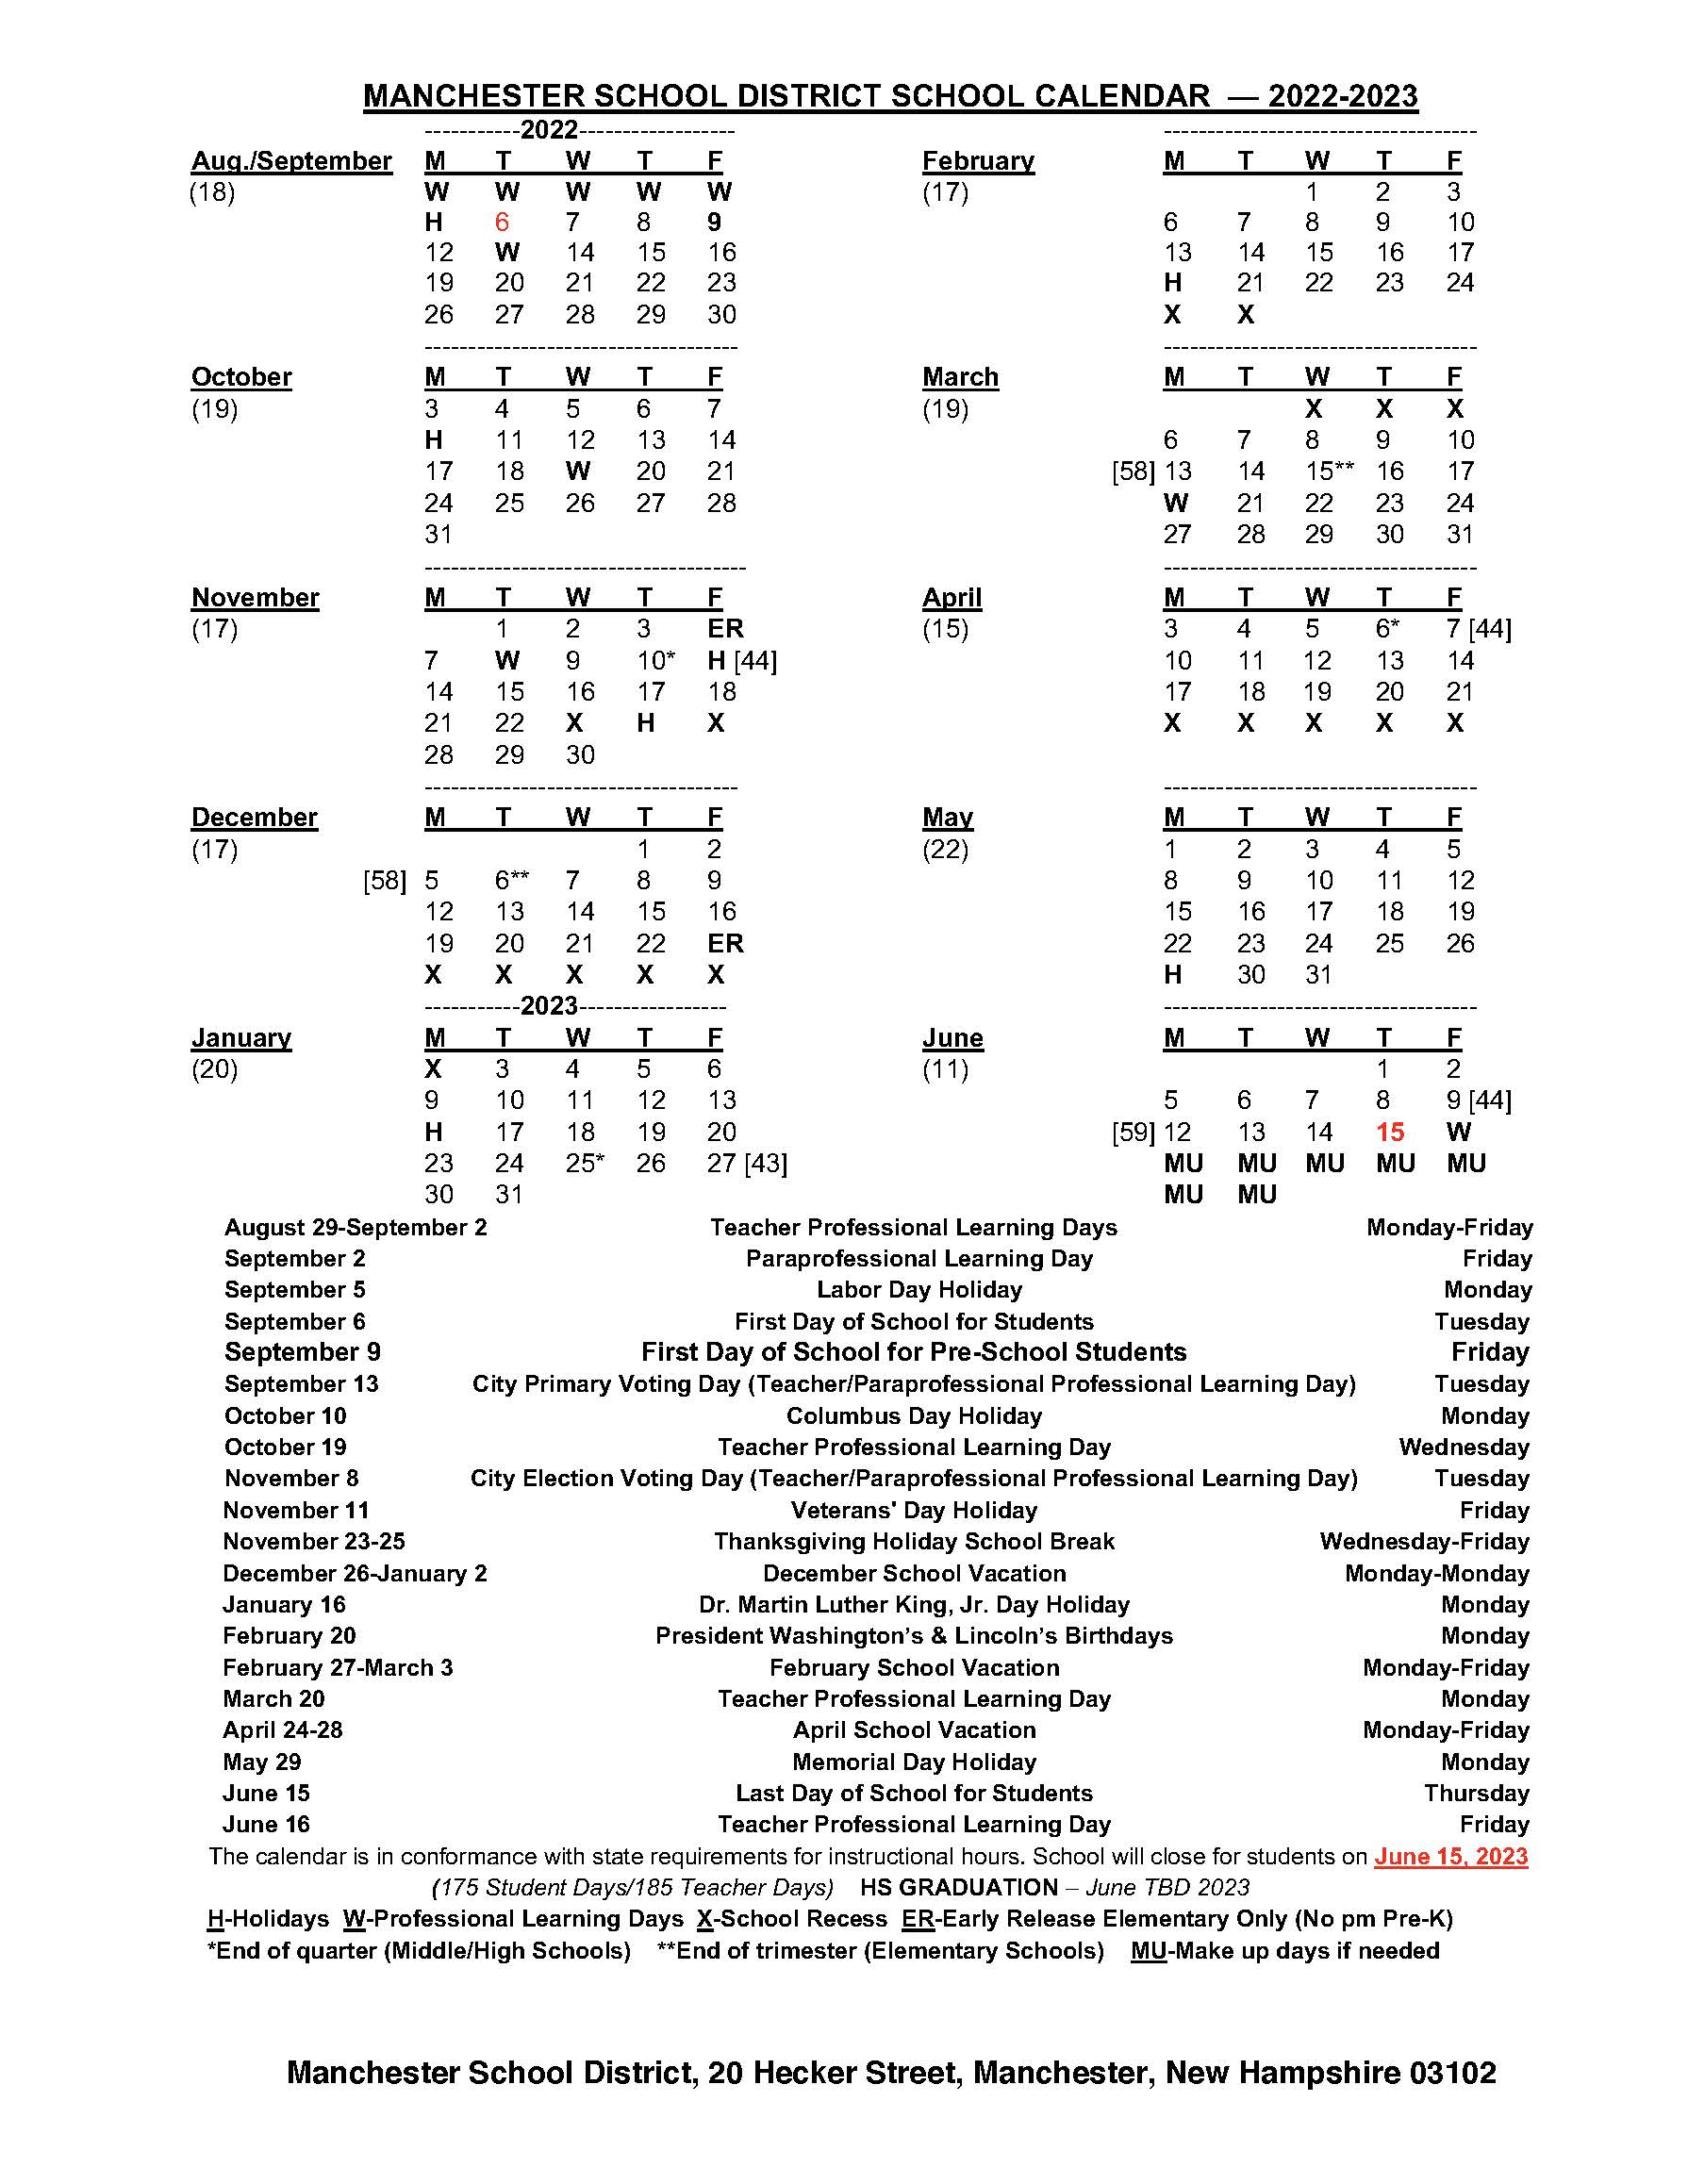 Calendar 22-23 